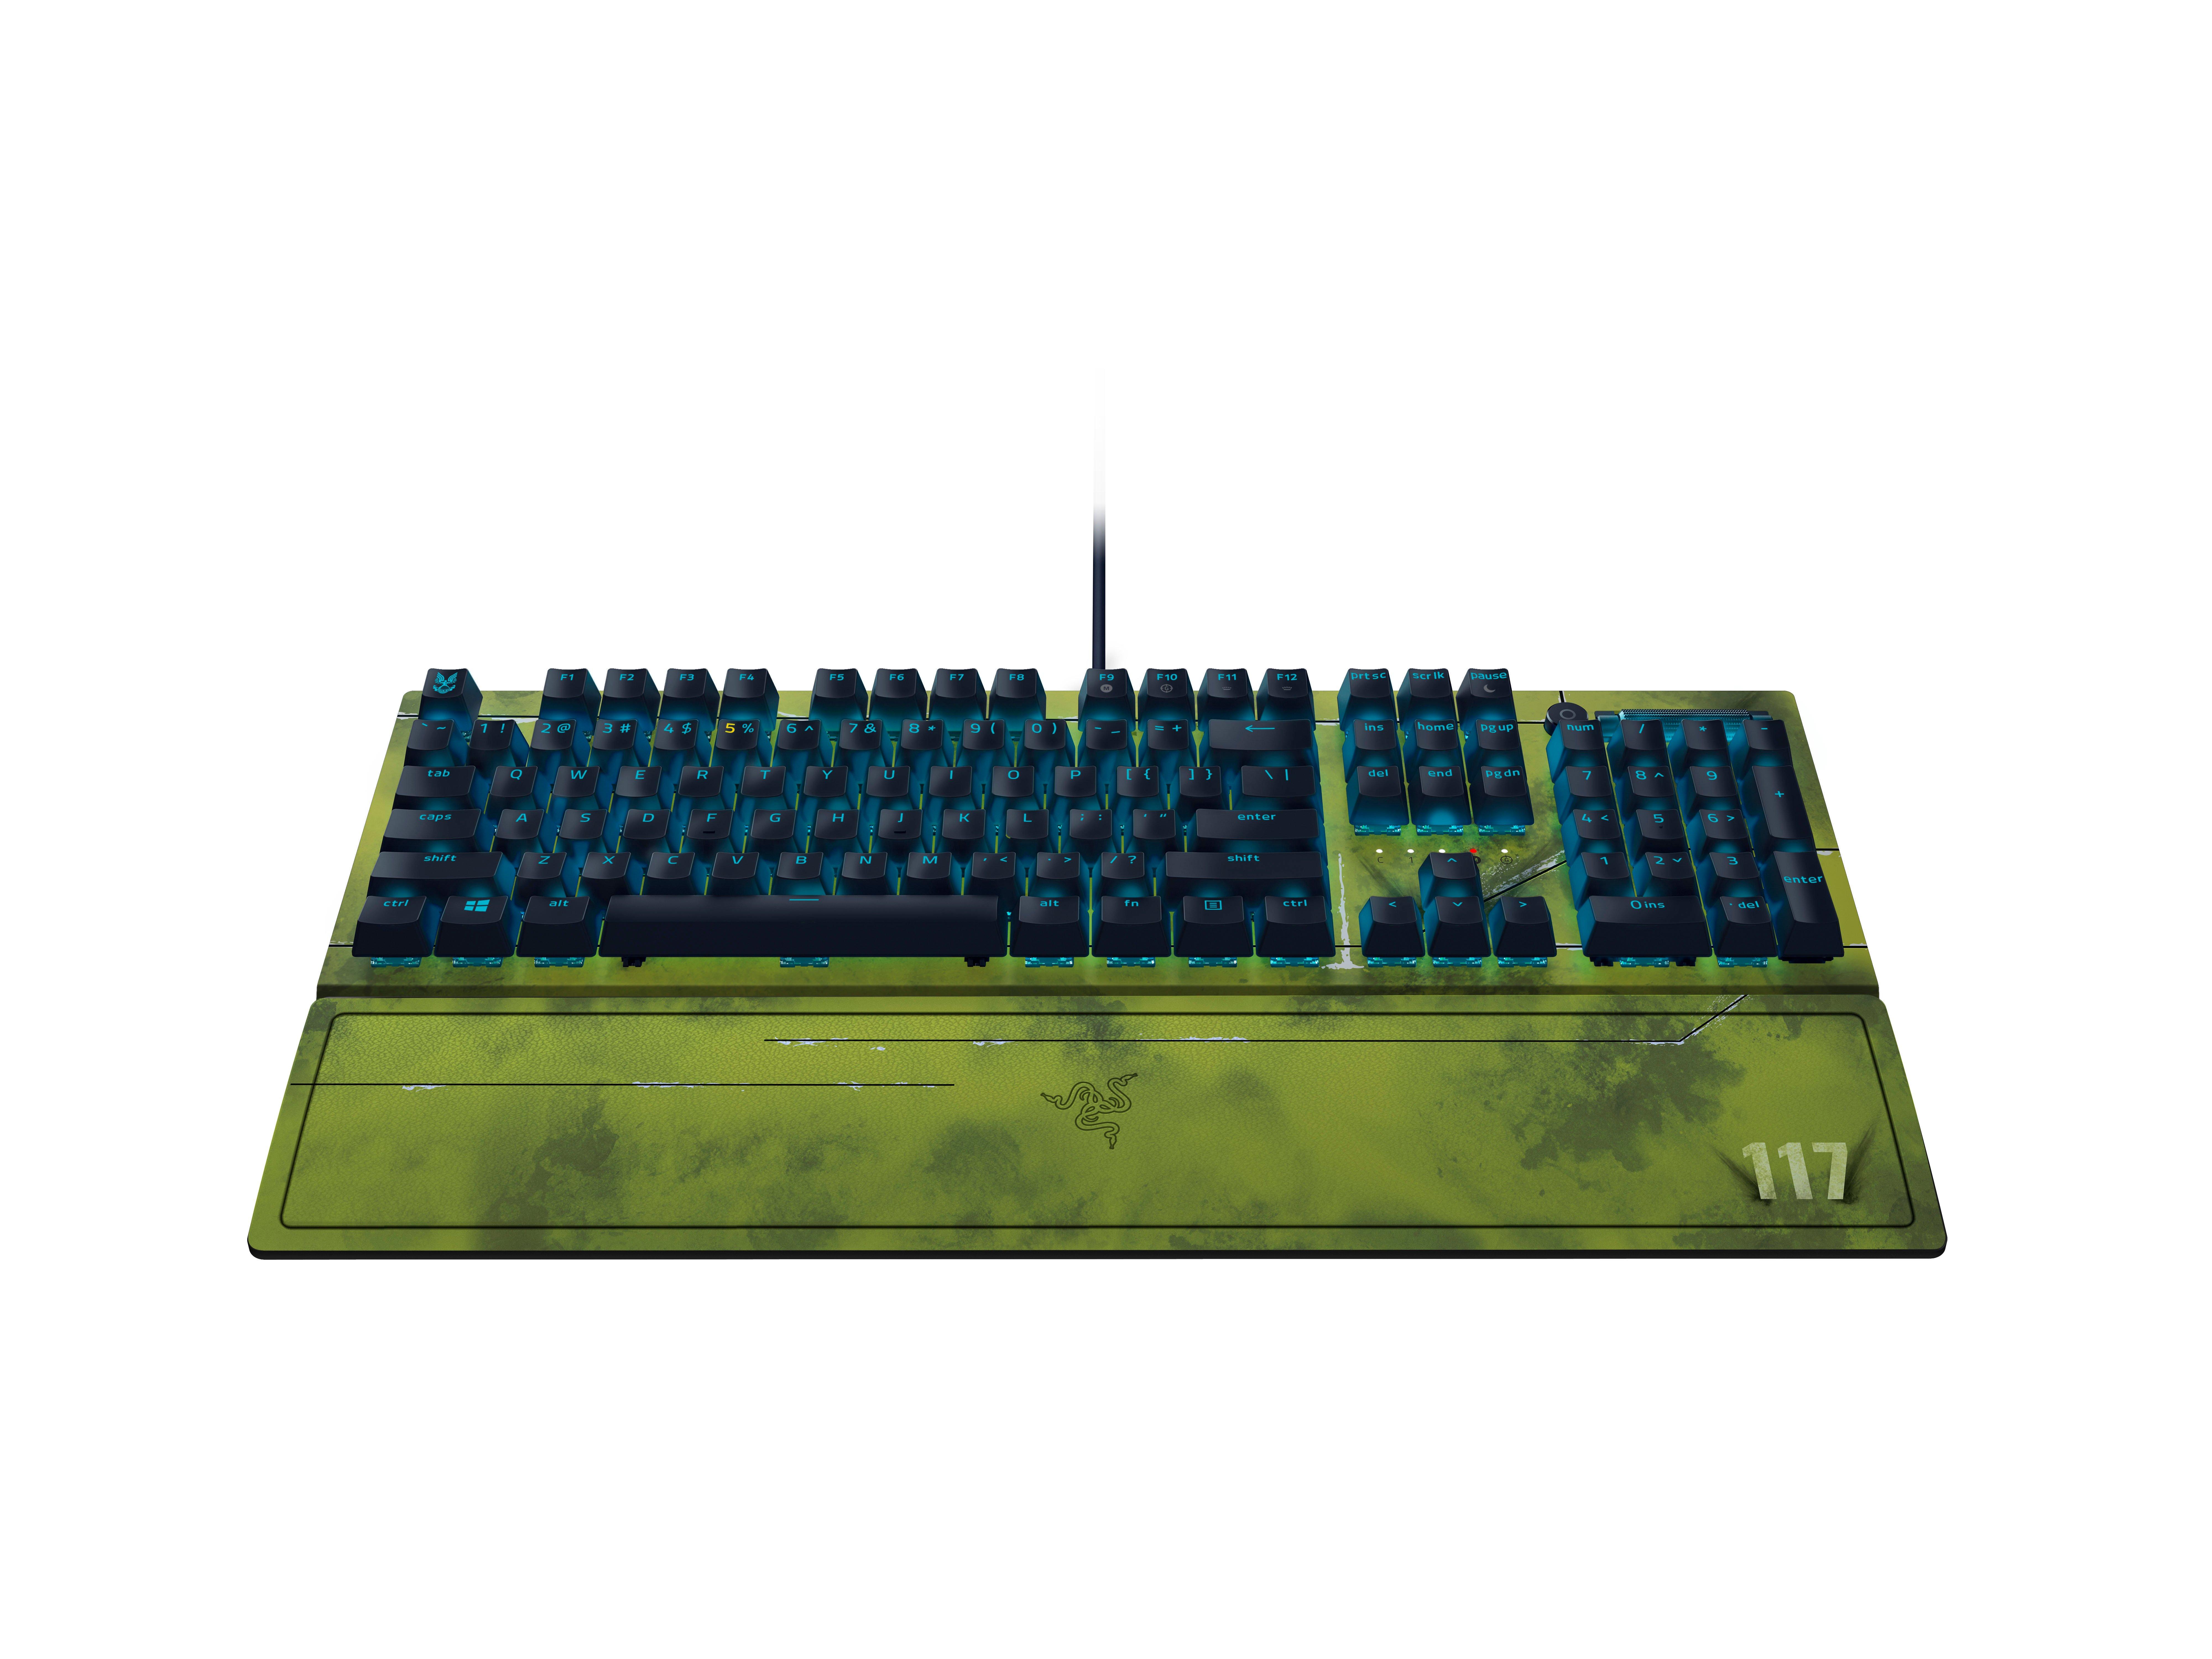 list item 8 of 8 Razer BlackWidow V3 Green Switch Mechanical Gaming Keyboard - Halo Infinite Edition